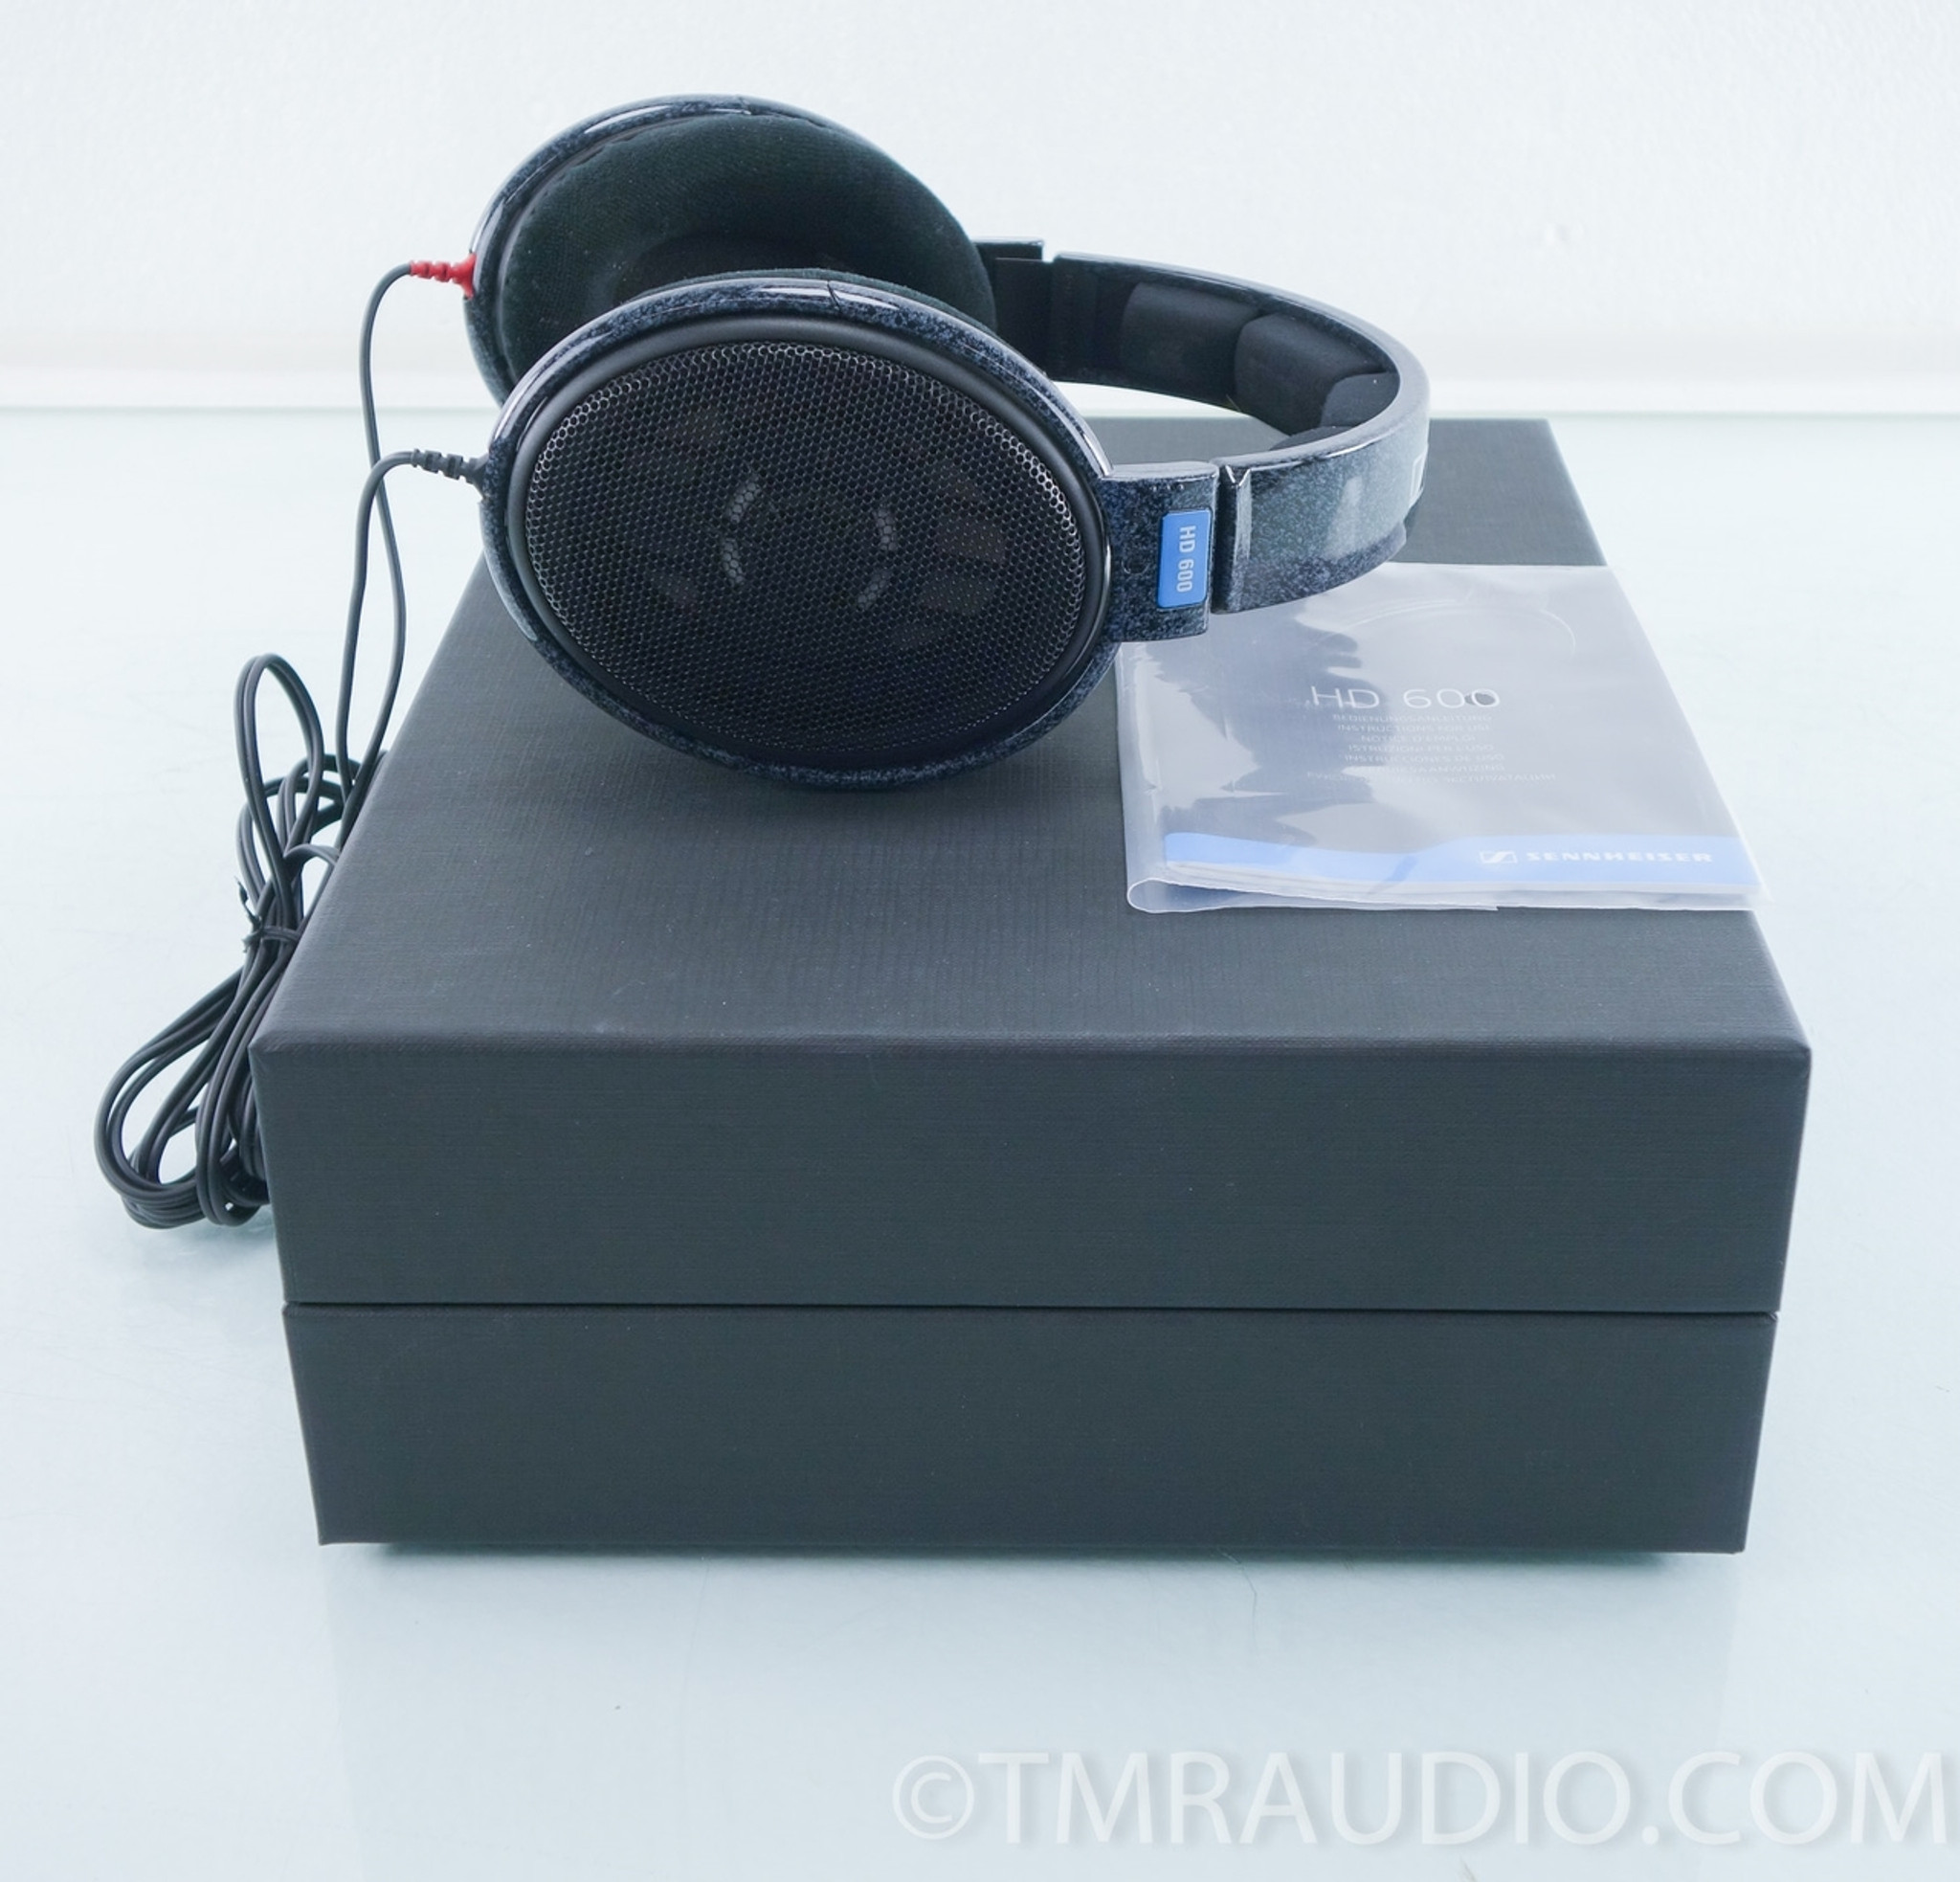 Sennheiser HD 600 Headphones - Open Box –